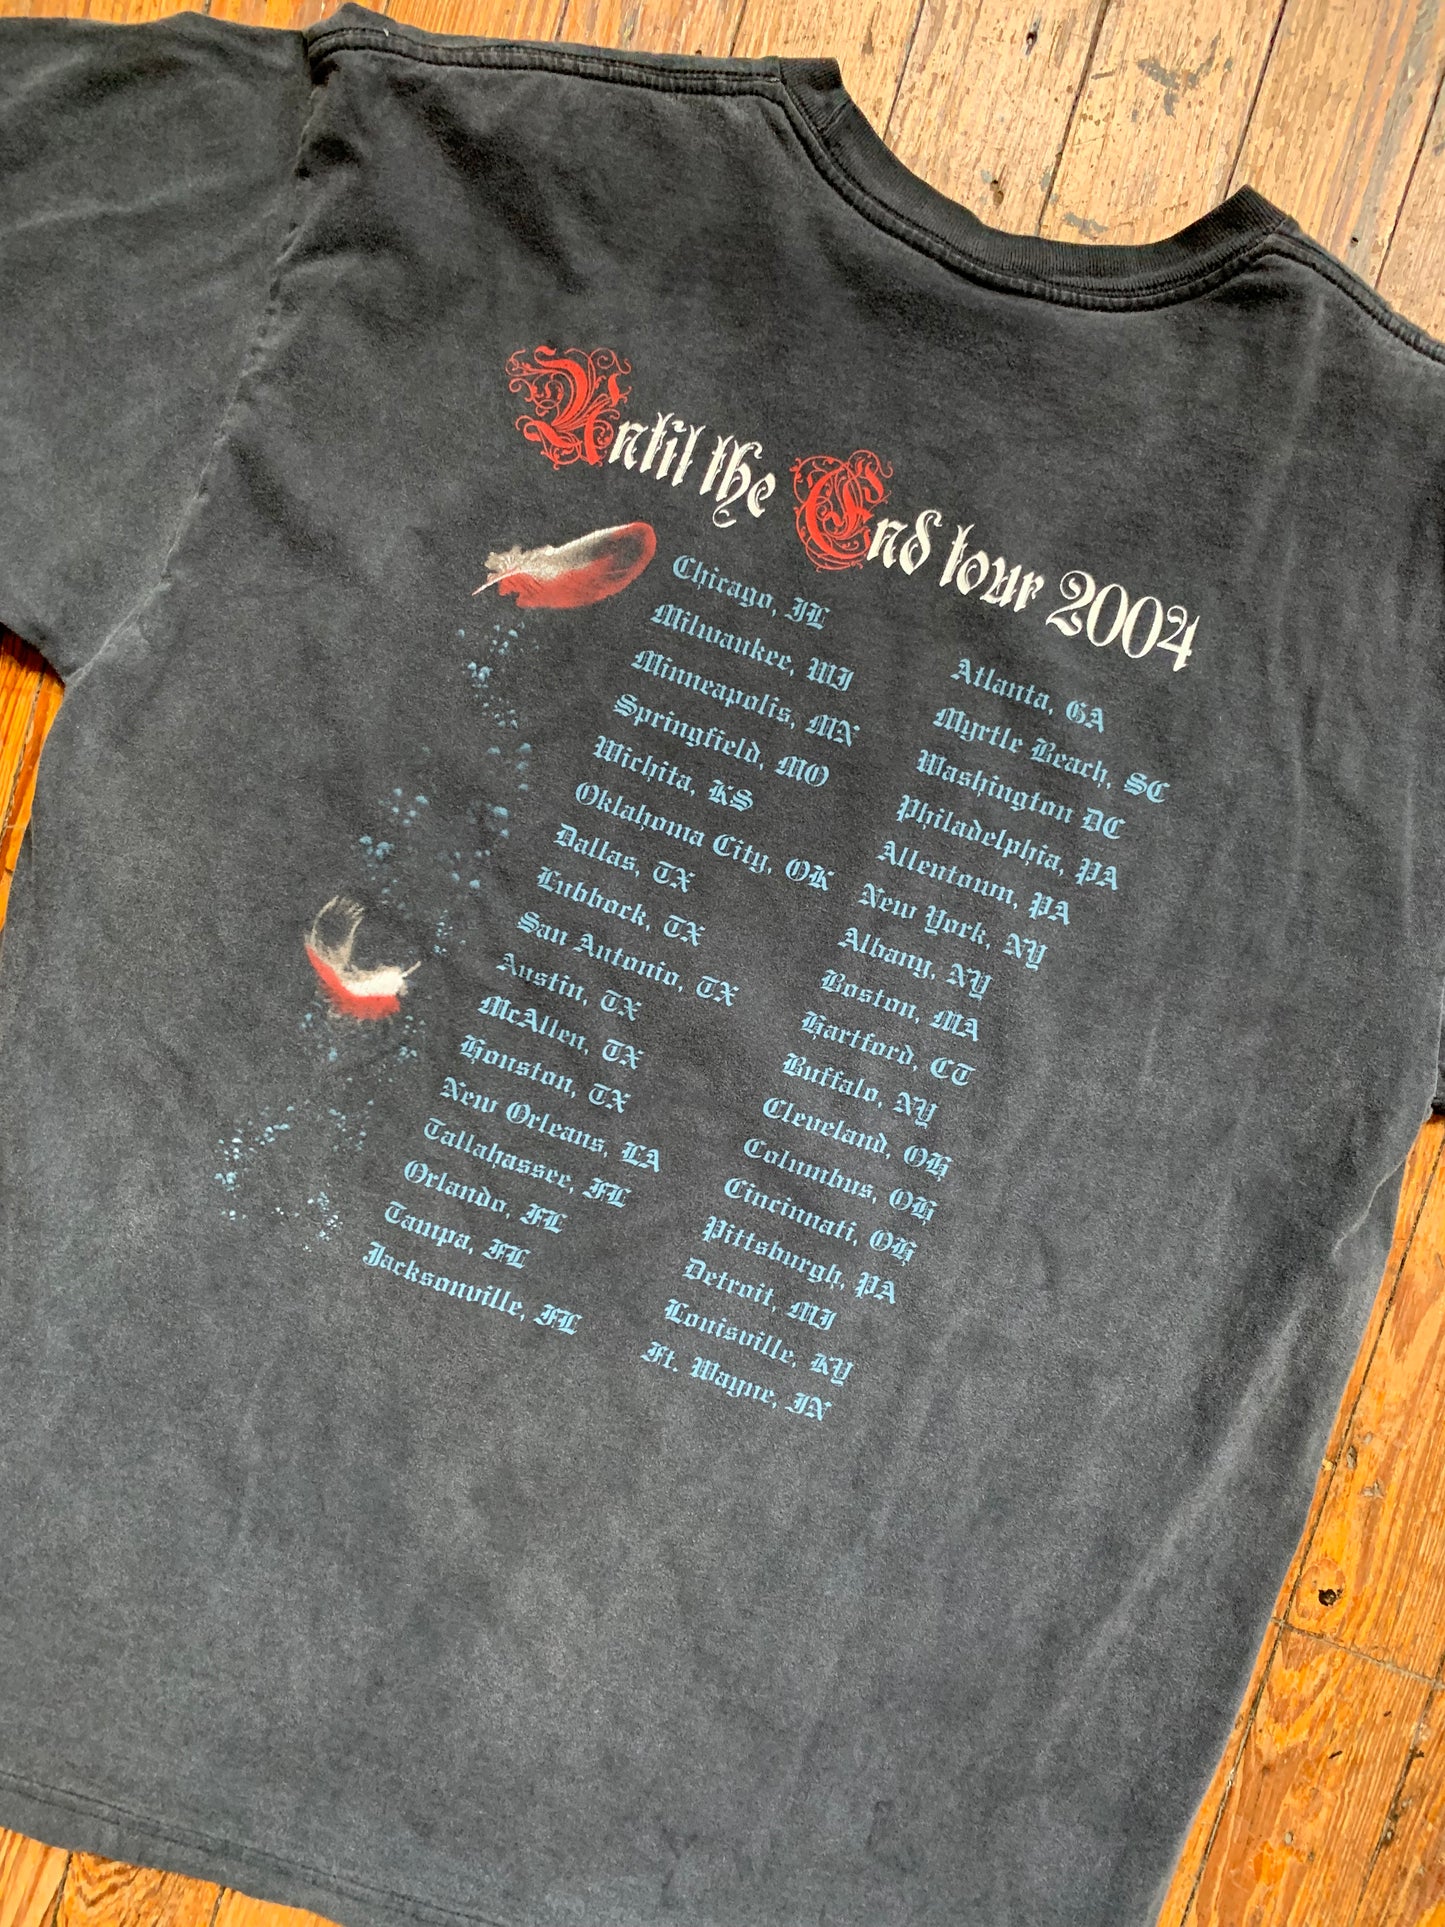 Kittie “Until the End” 2004 Tour Shirt